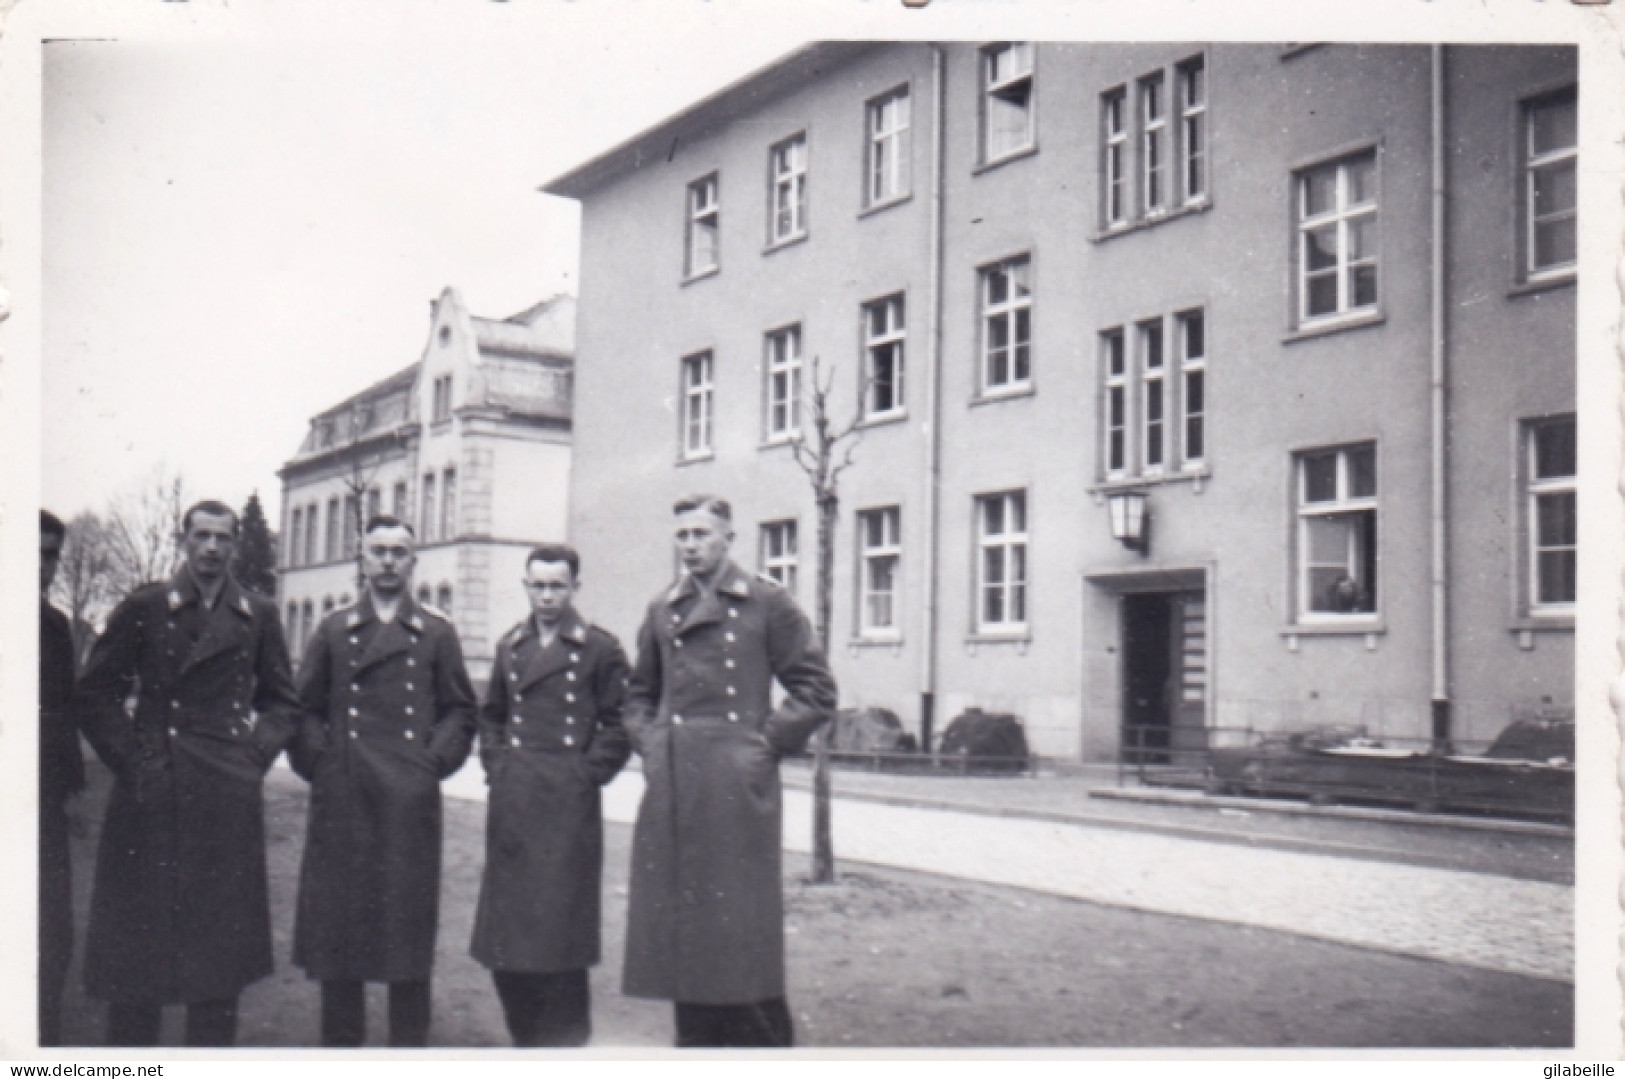  Photo Originale - 1941 - Guerre 1939/45  - Soldats Allemands En Garnison A HAMDORF ( Rendsburg-Eckernförde. ) - War, Military